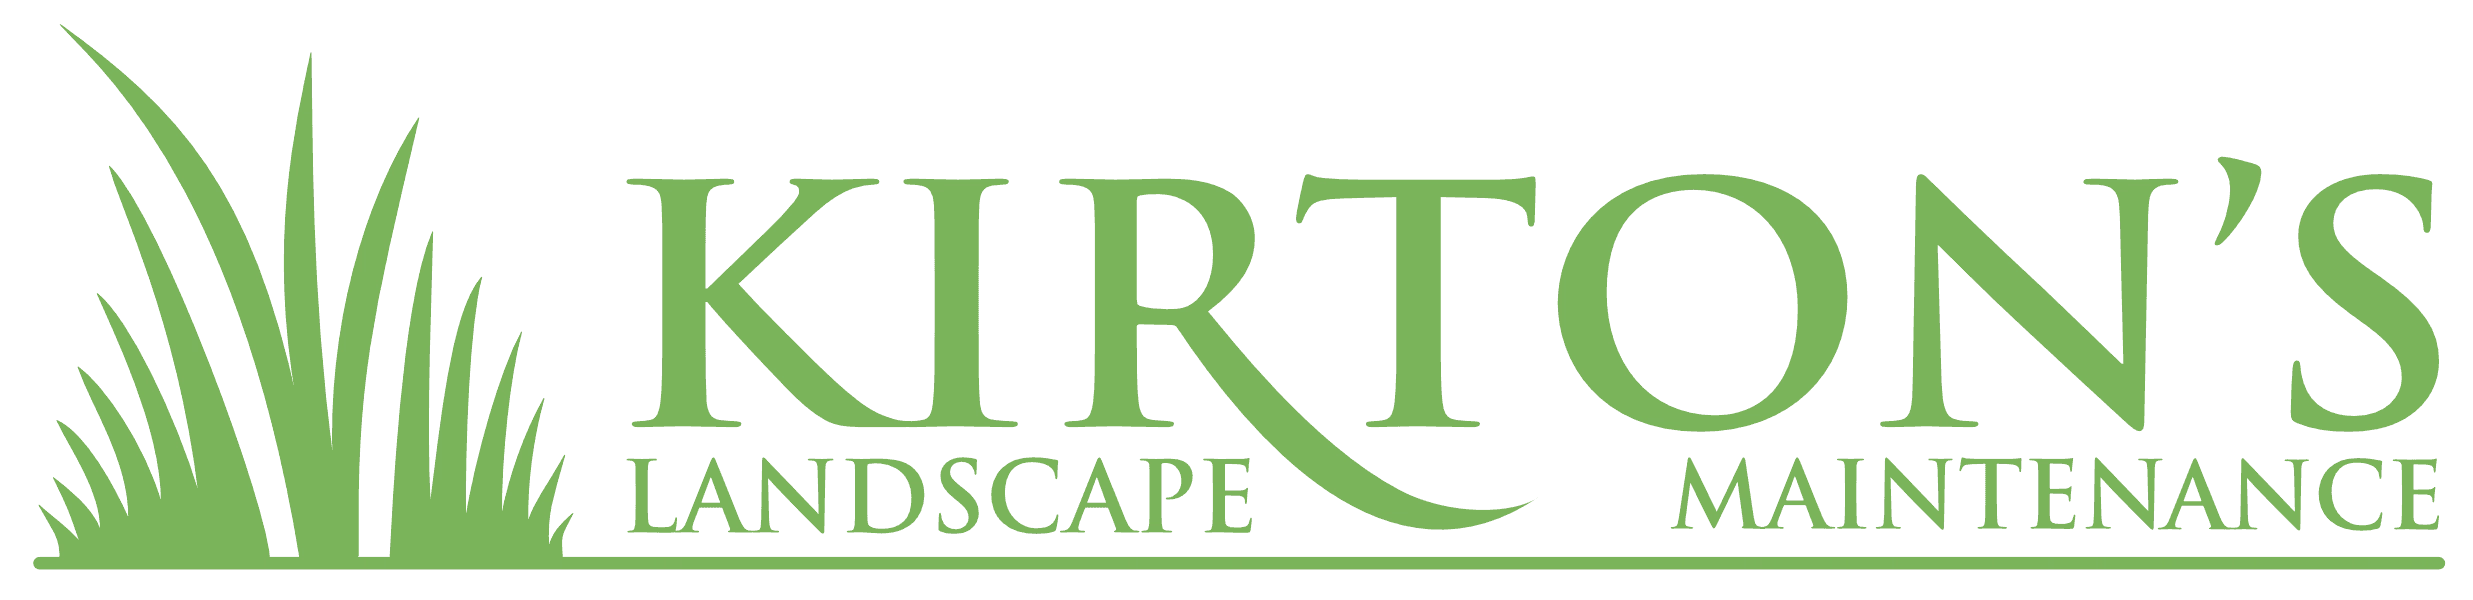 Kirton's Landscape Logo